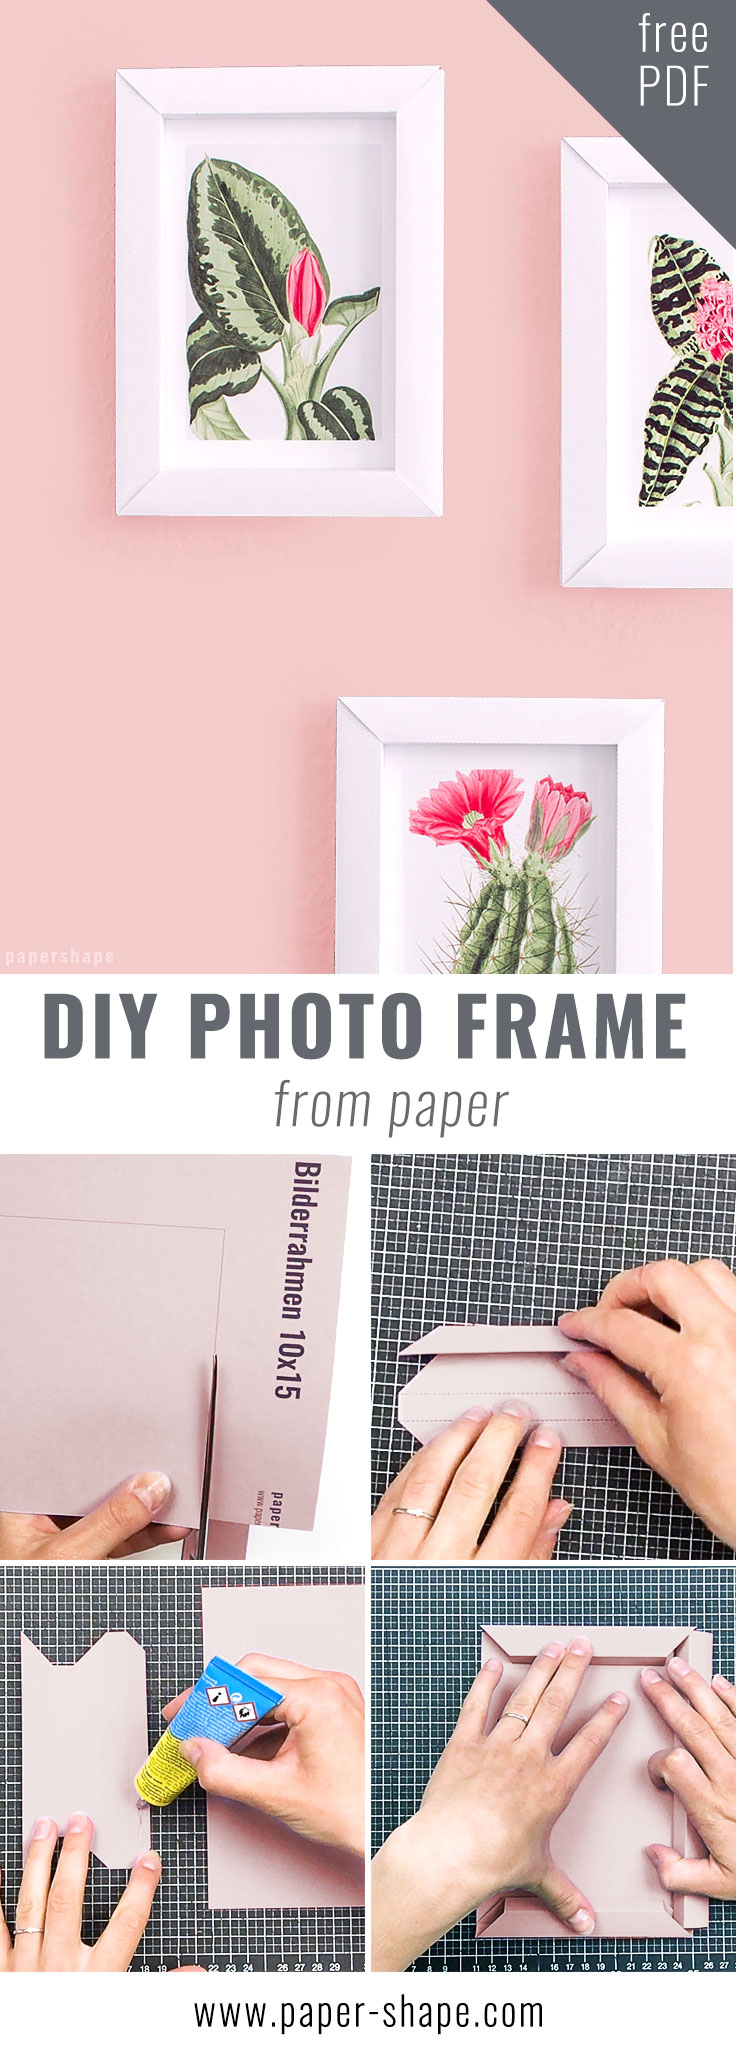 HOW TO MAKE MINI FRAMES / DIY PAPER FRAME FOR PHOTO 